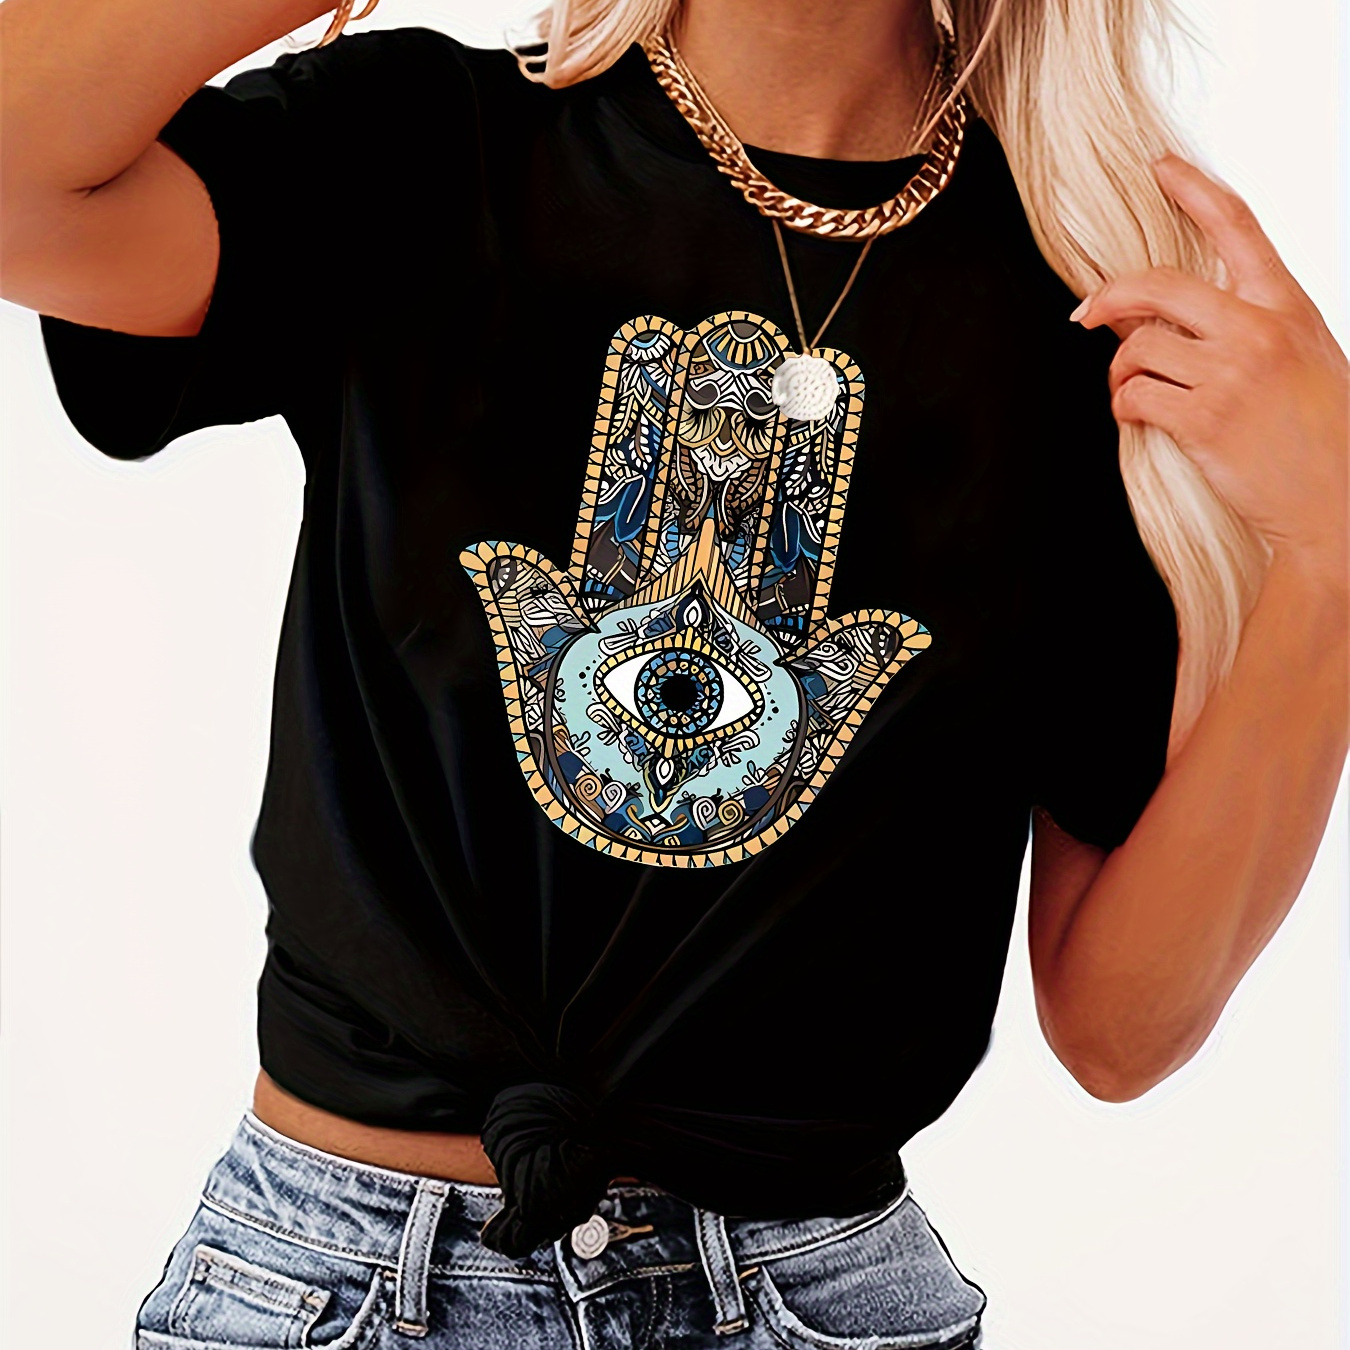 

Bohemian Style Women's T-shirt, Eye In Palm Illustration Print, Casual Fashion Short Sleeve Top Tee